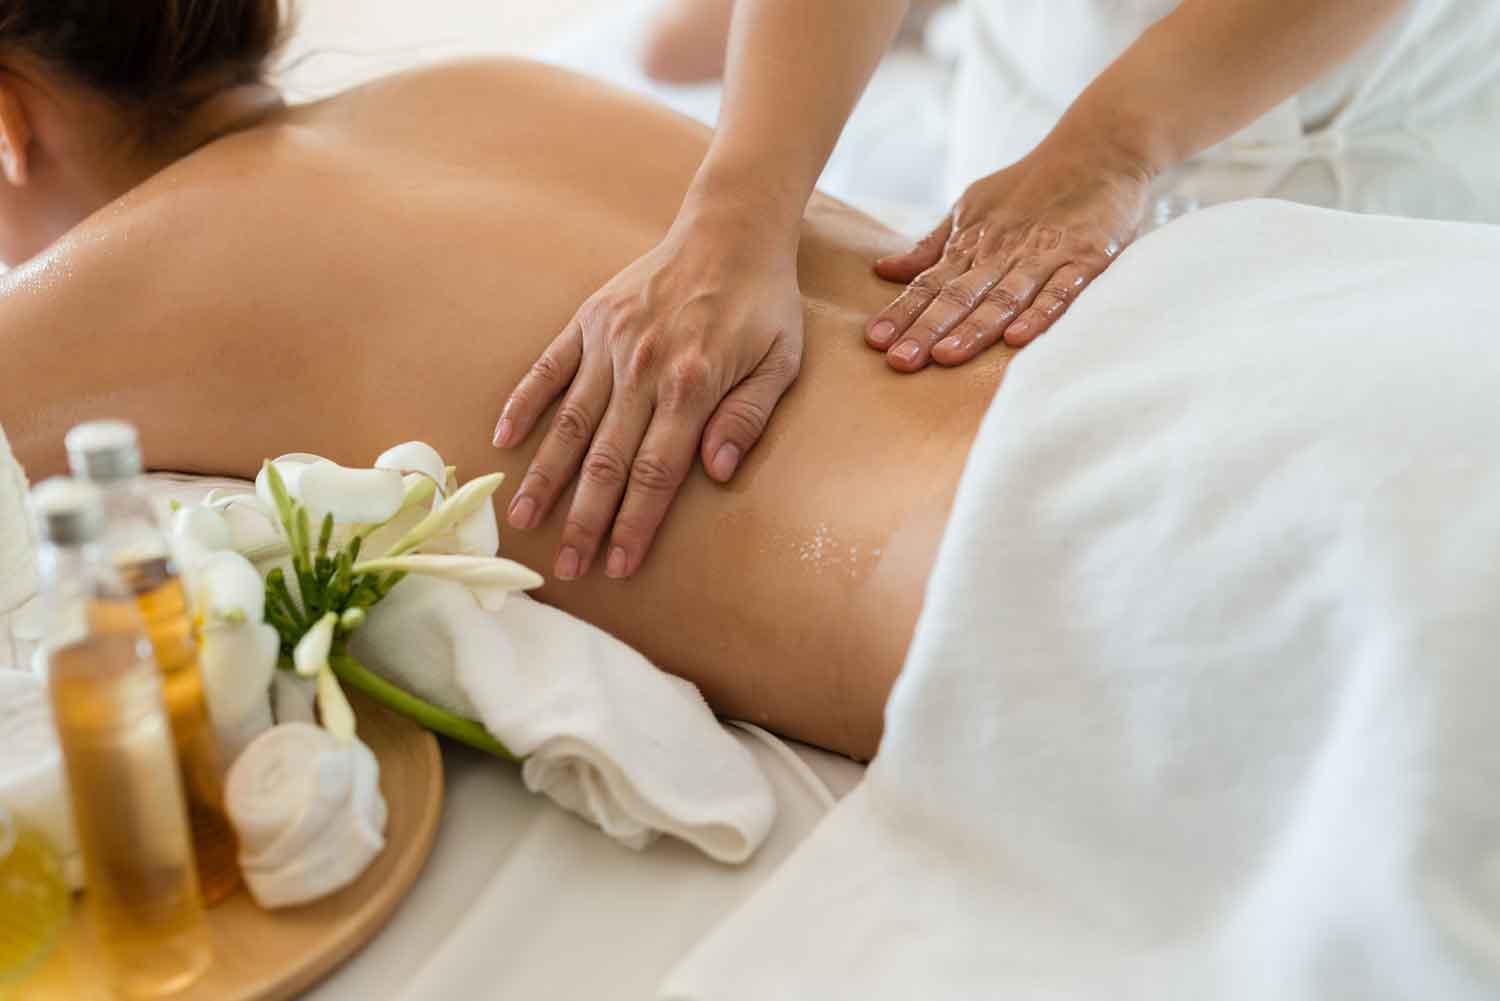 Back massage with natural massage oil